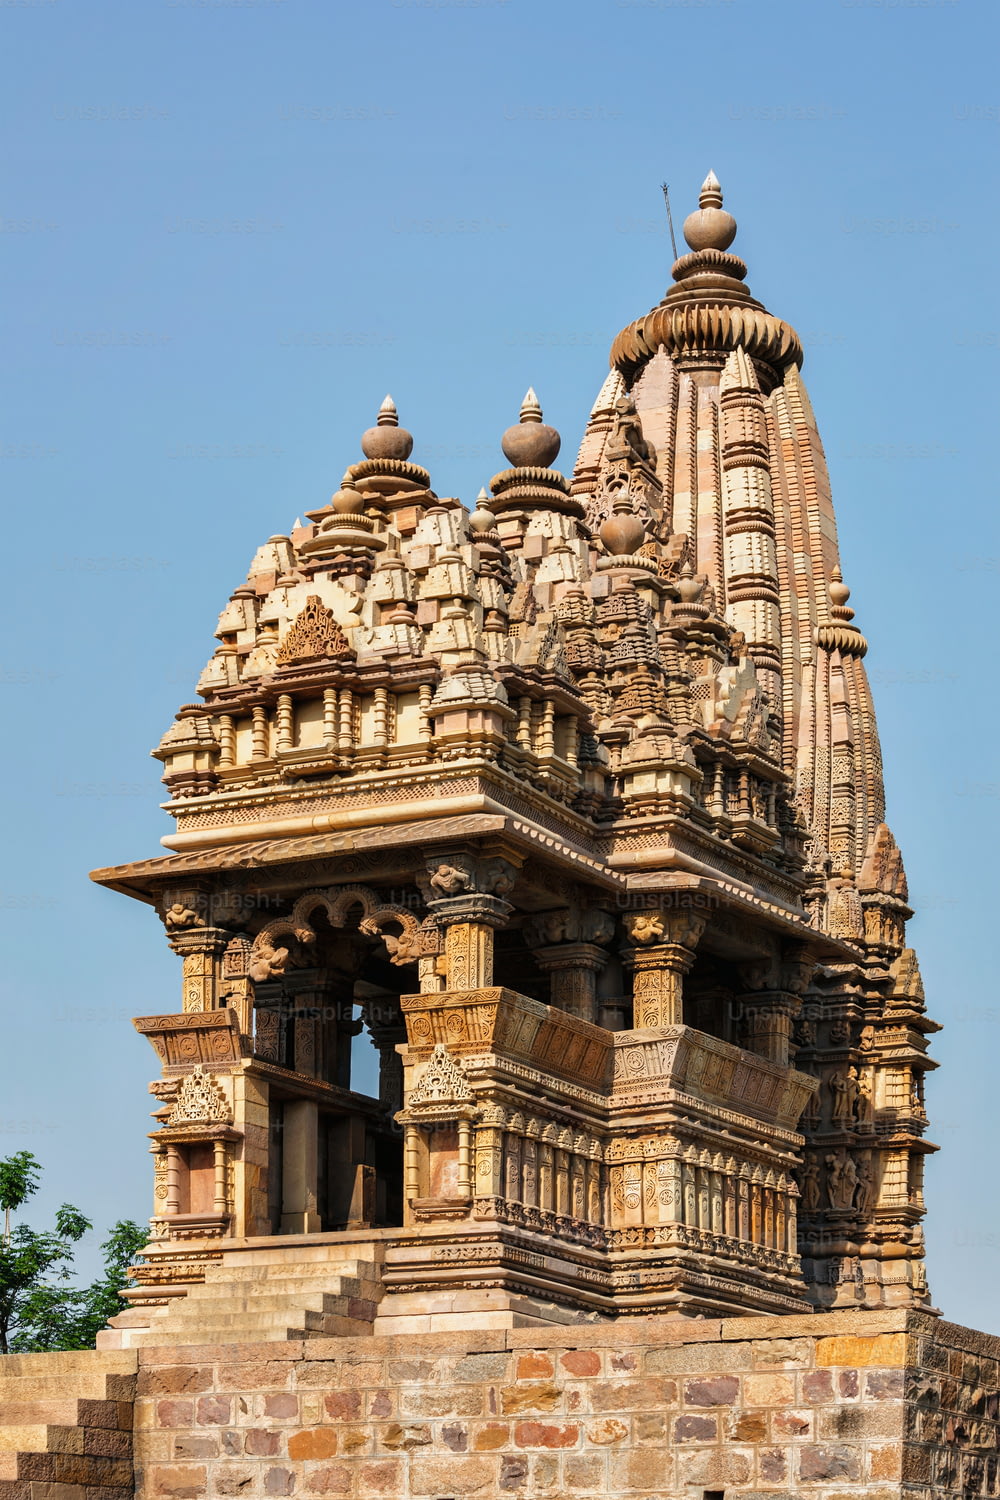 Javari Temple - one of famous tourist attractions of Khajuraho with sculptures. India, Khajuraho, Madhya Pradesh, India, Khajuraho, Madhya Pradesh, India